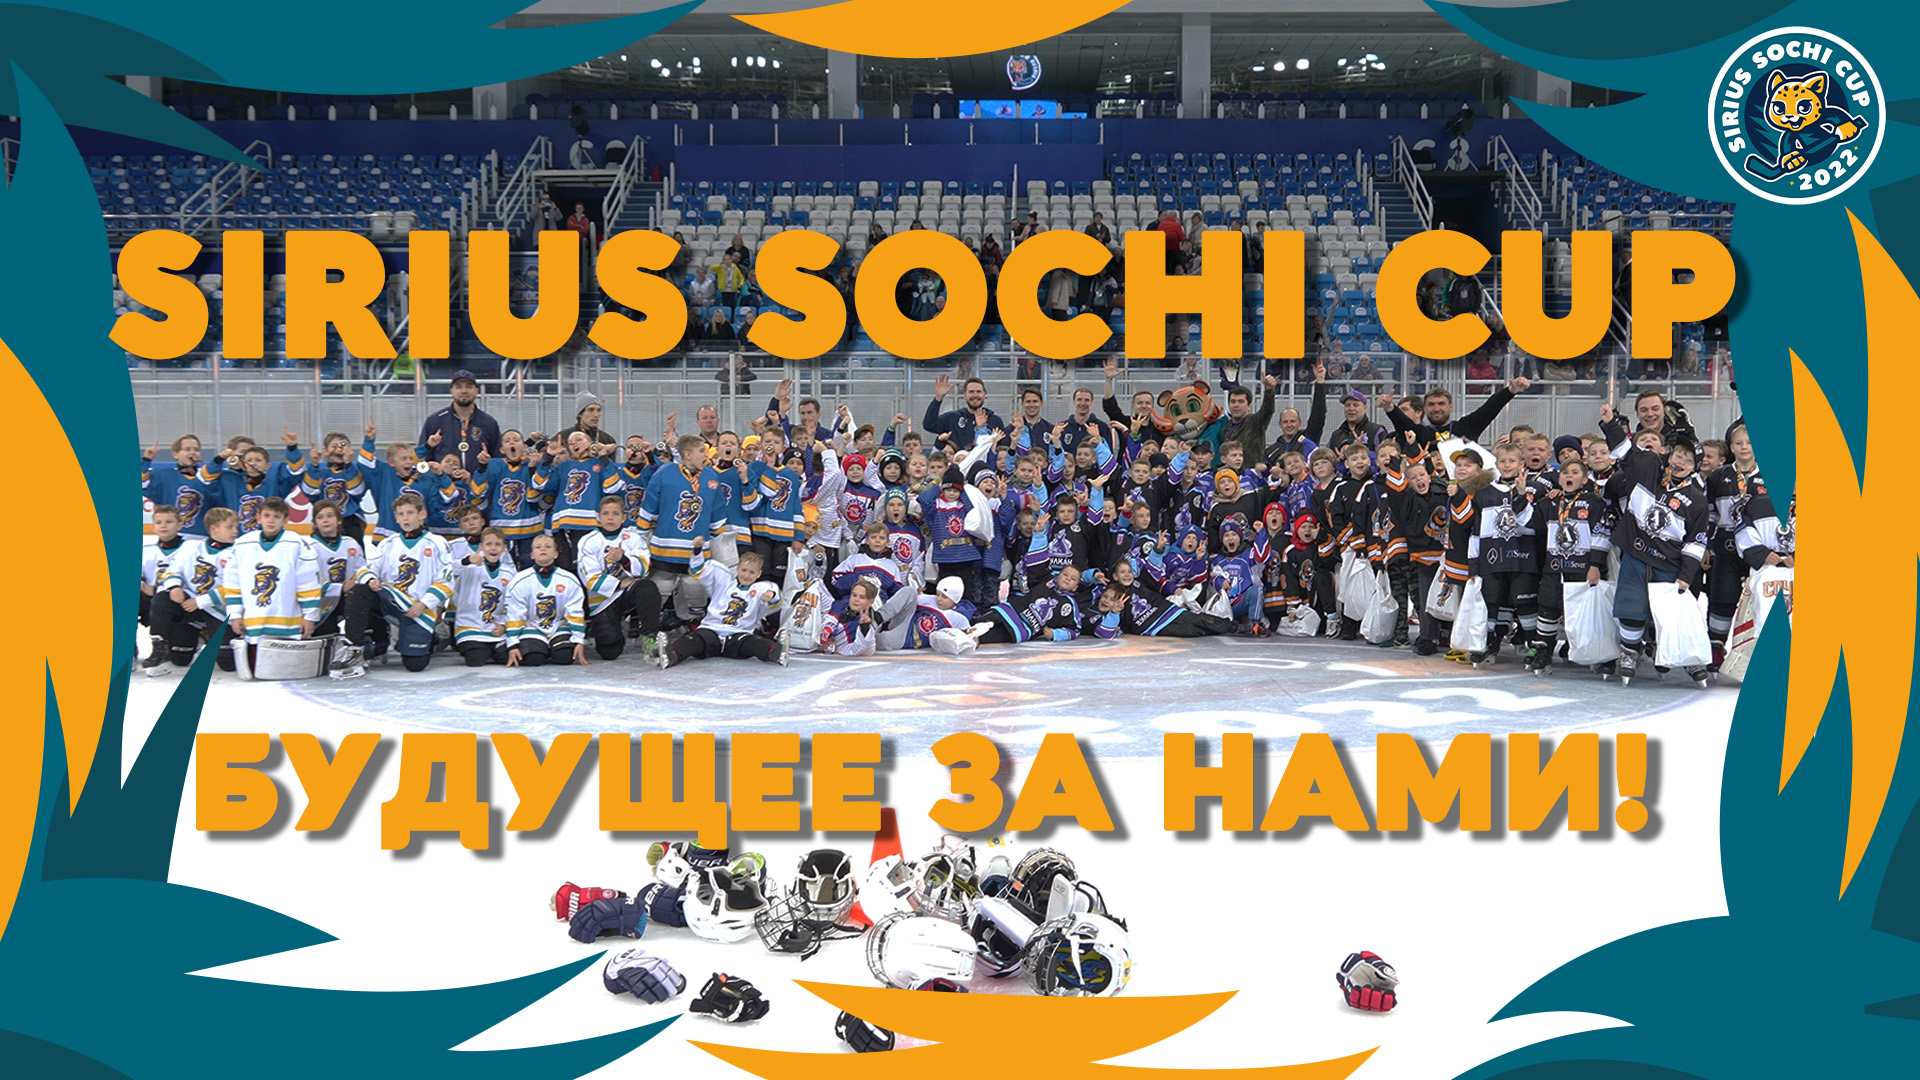 Sirius Sochi Cup - будущее за нами!